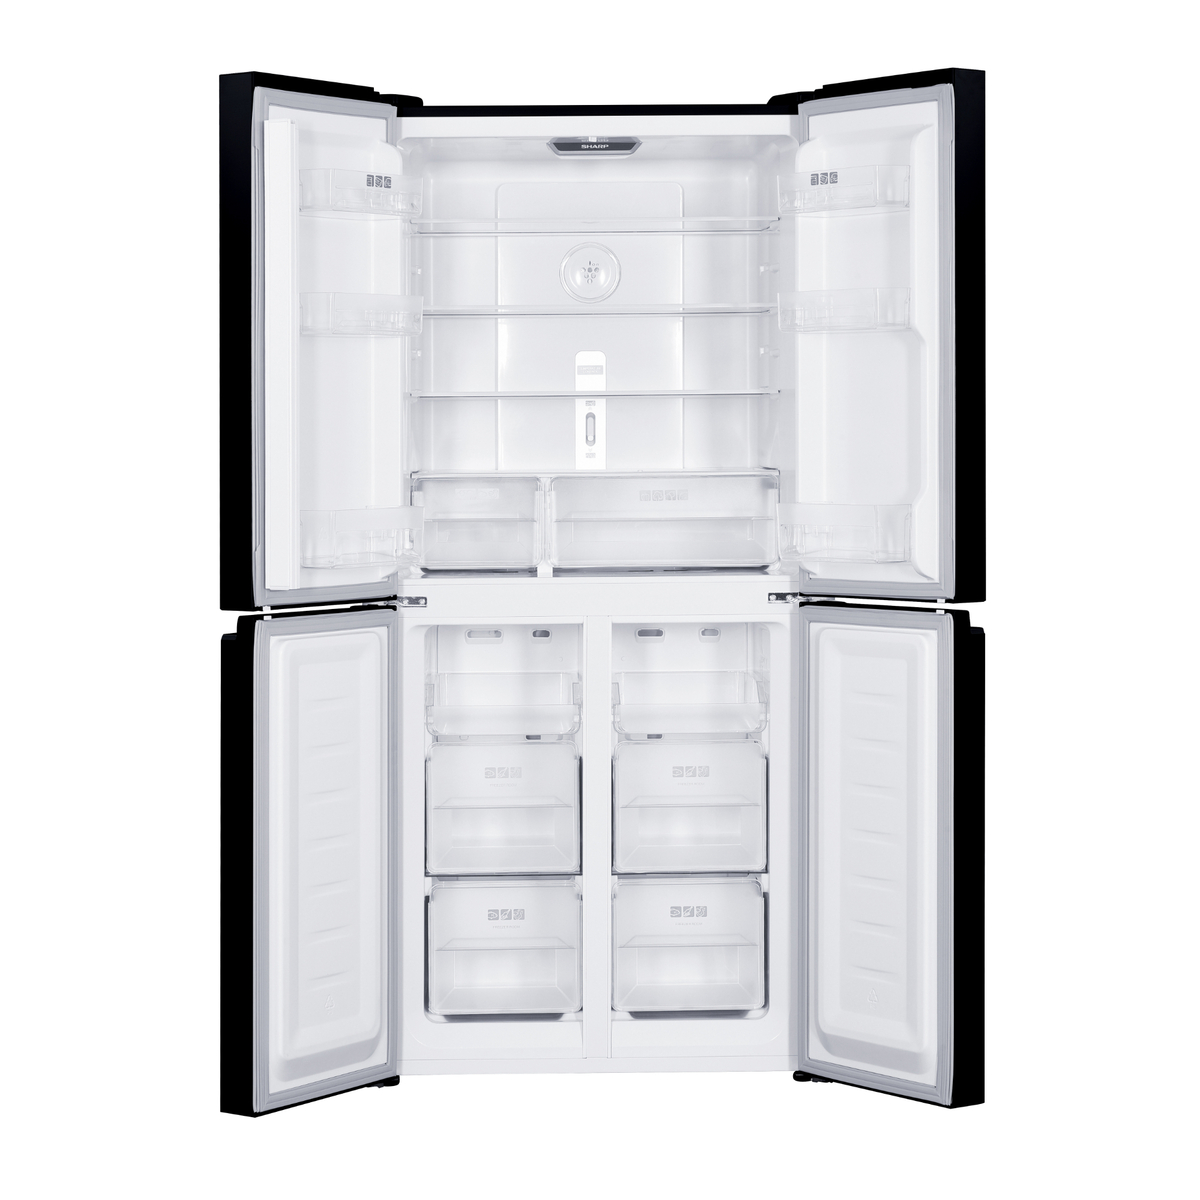 Sharp French Door Refrigerator, 401 L, Black Glass, SJ-FH560-BK3